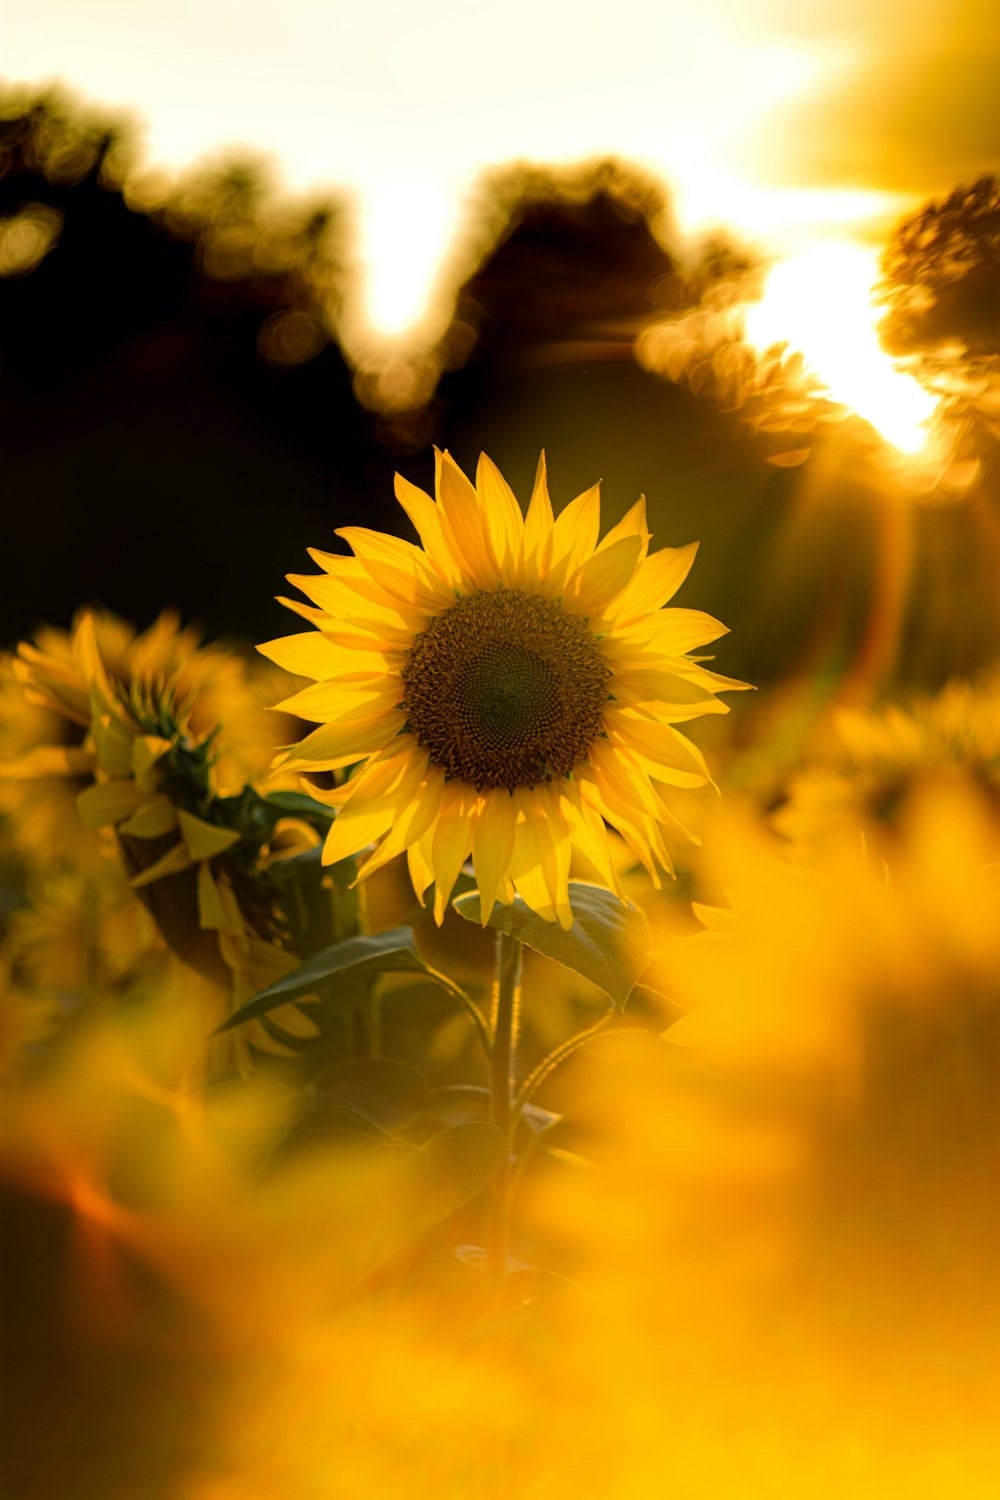 blooming yellow sunflower during sunrise